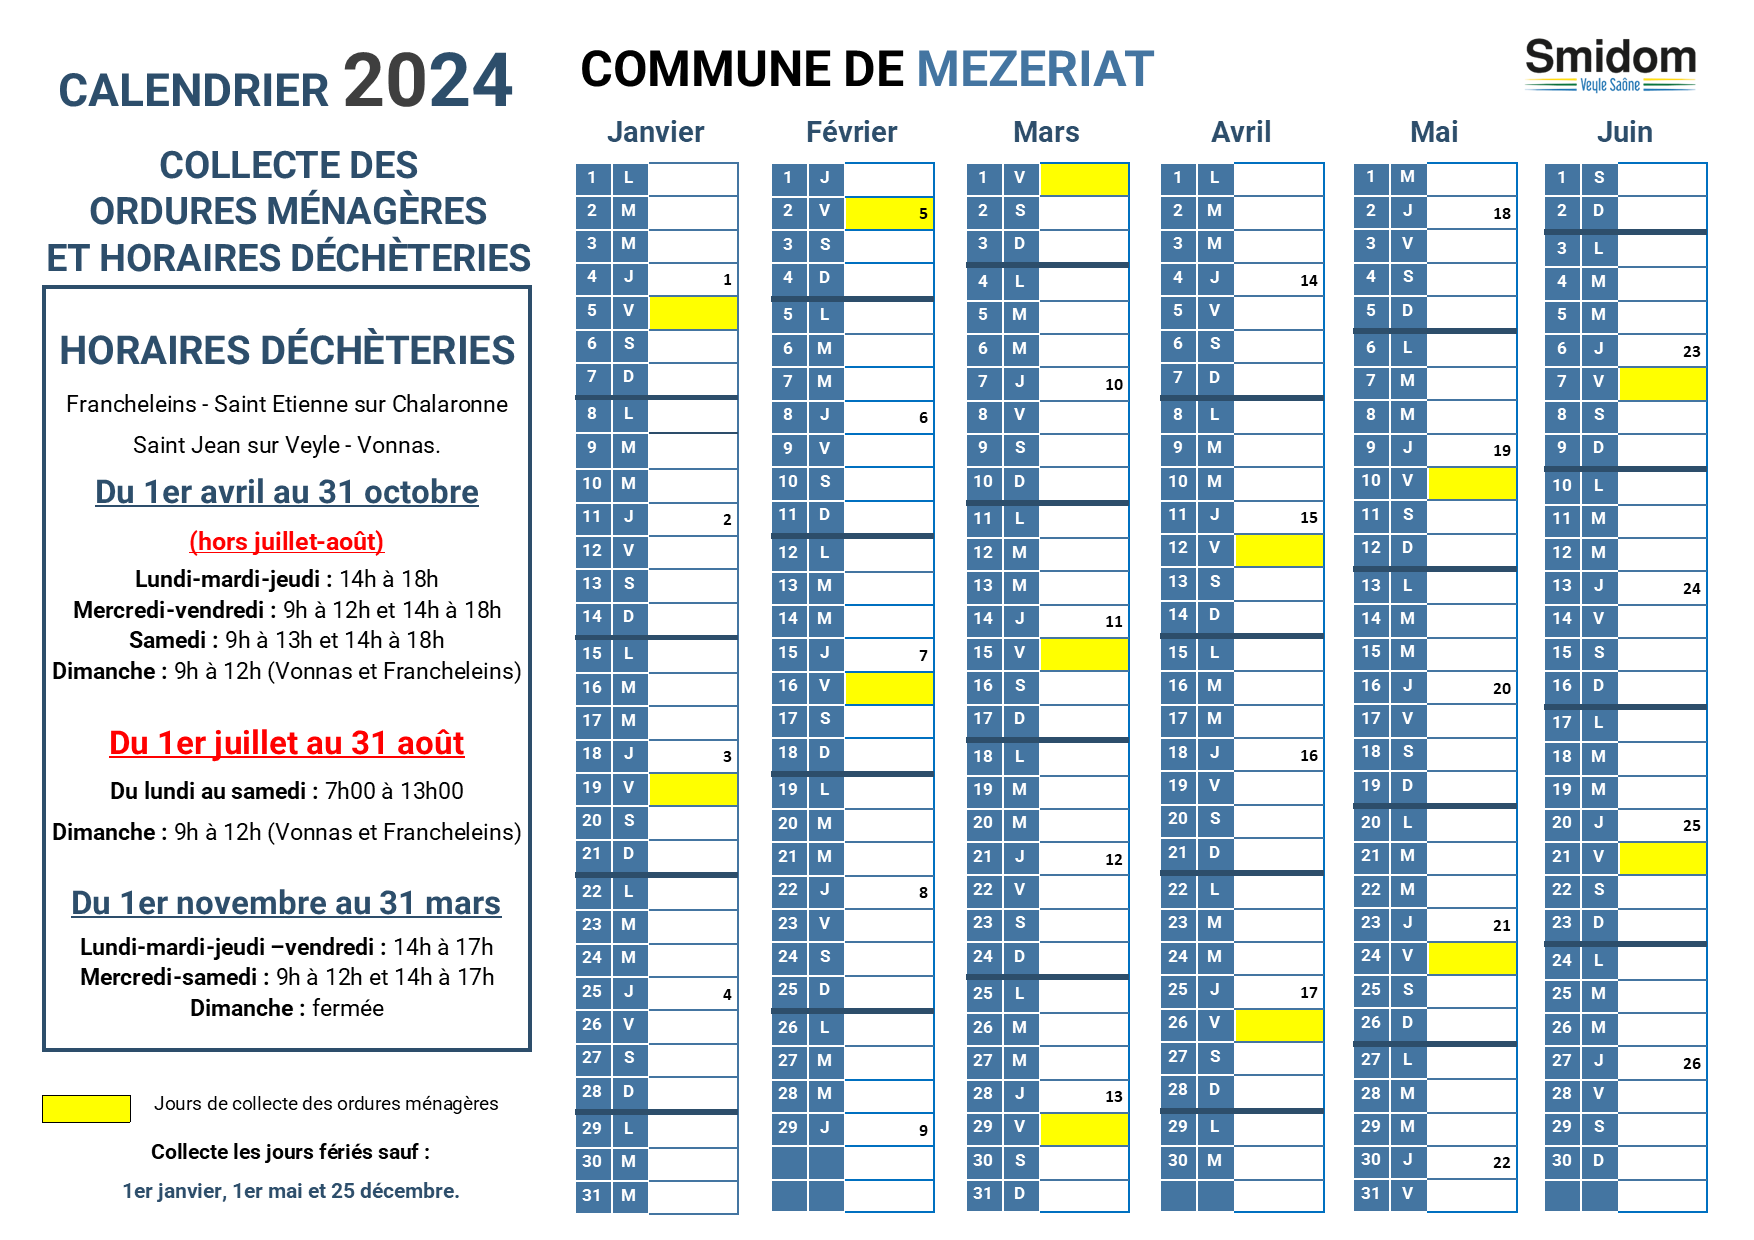 MEZERIAT - Calendrier 2024.png